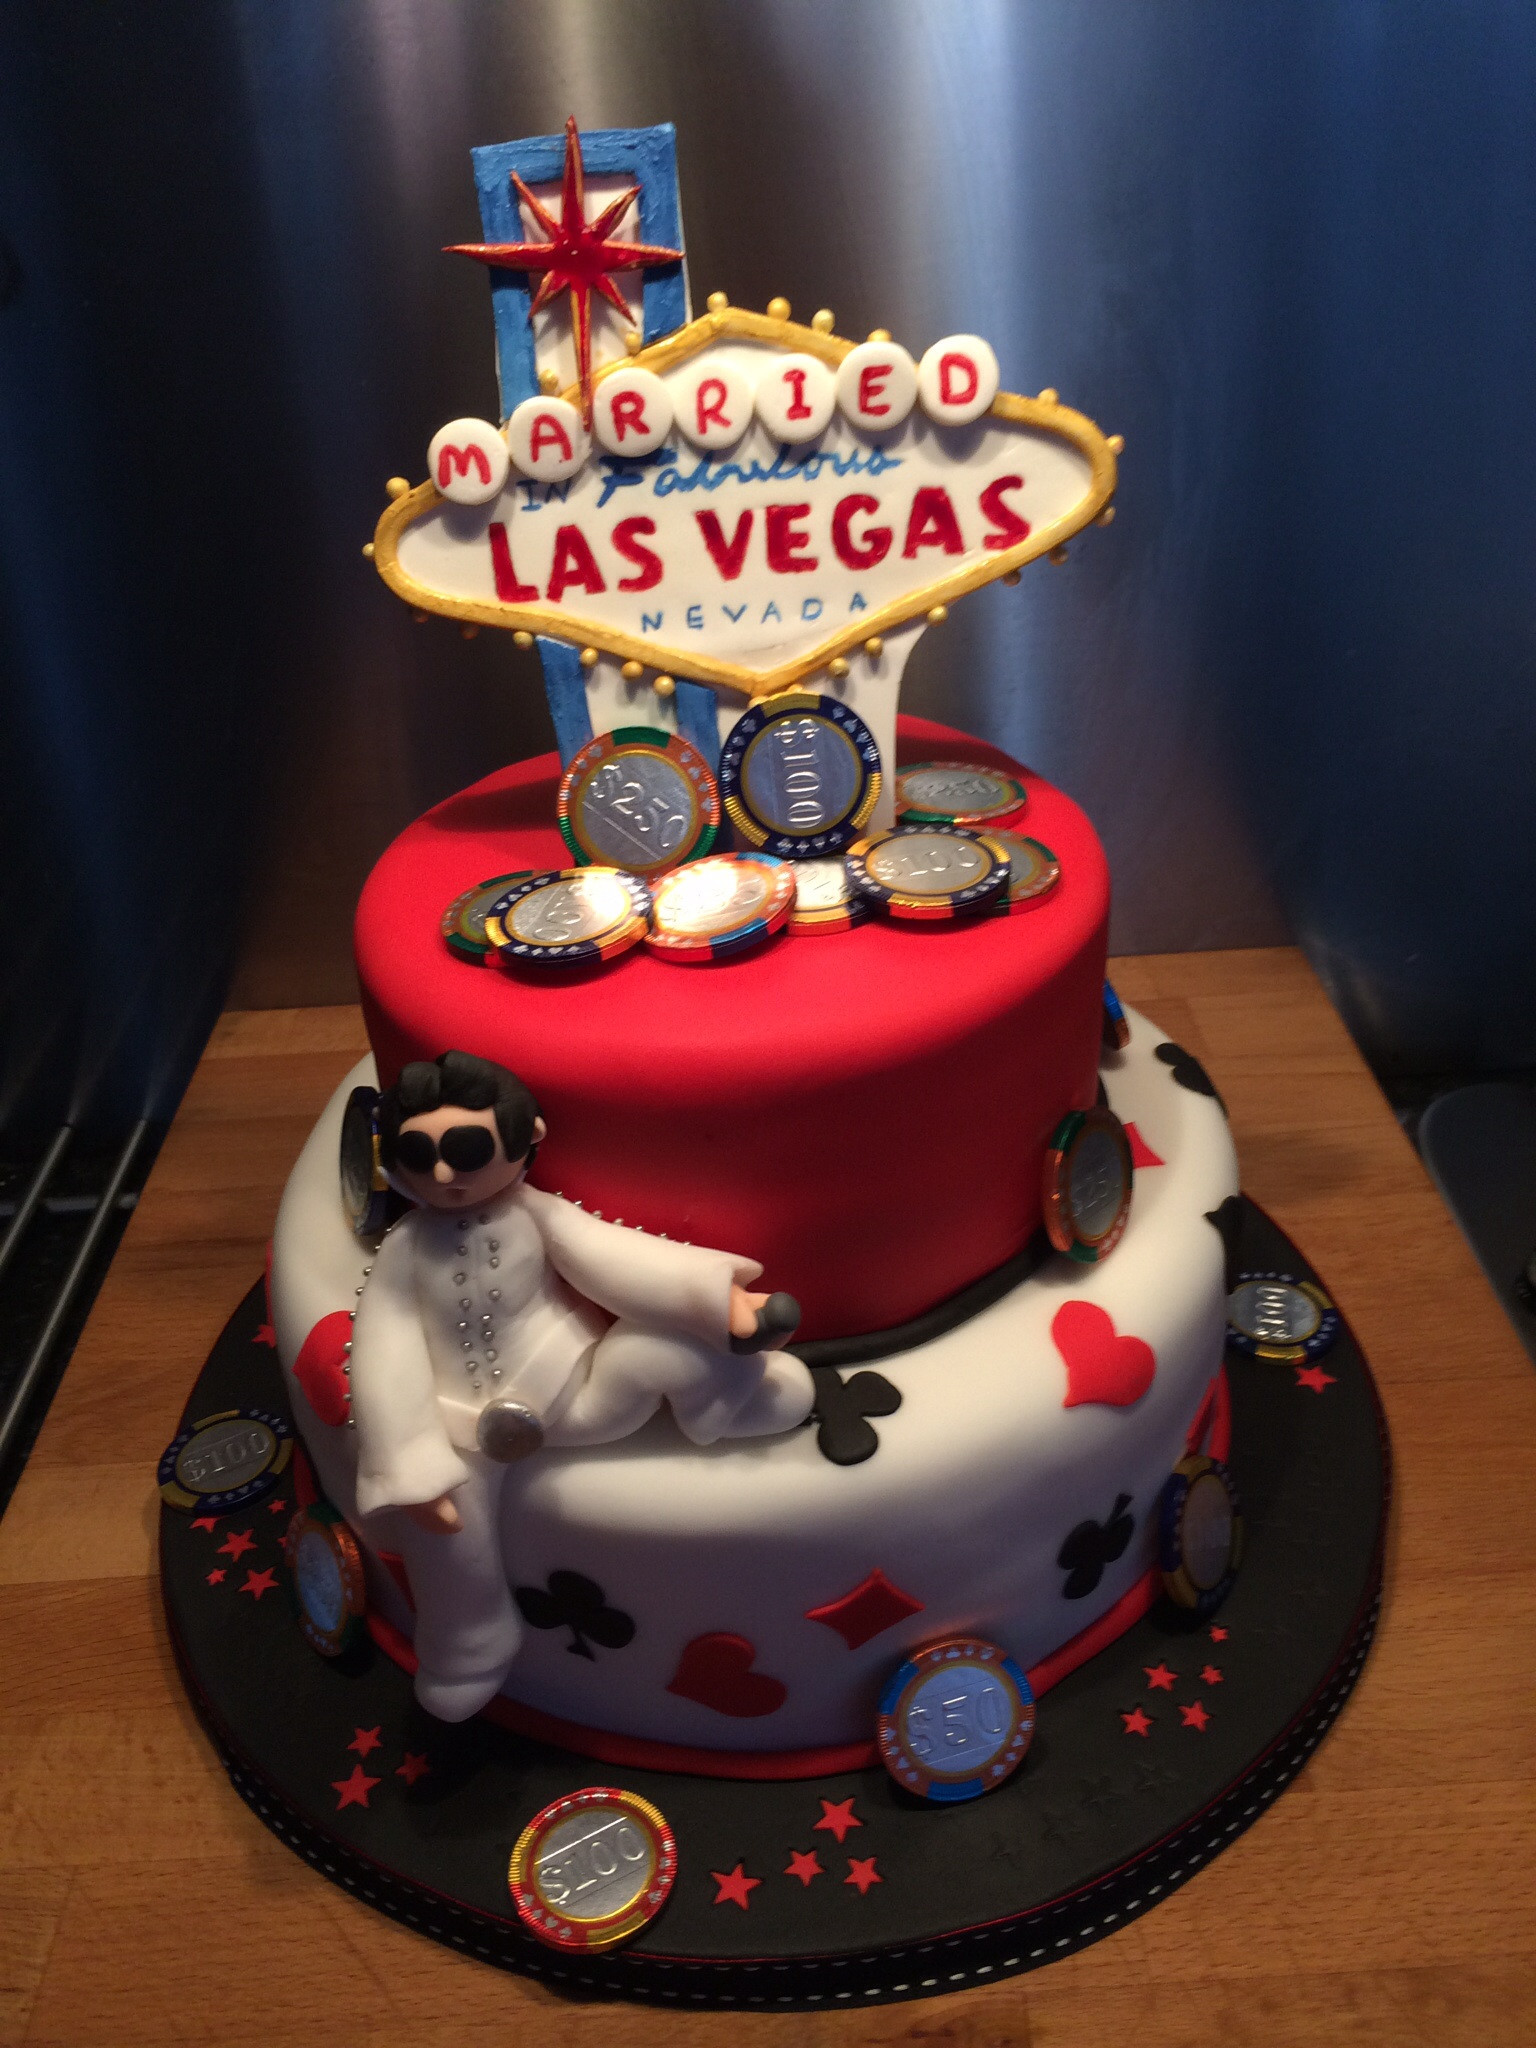 Wedding Cake Las Vegas
 Las vegas wedding cakes idea in 2017